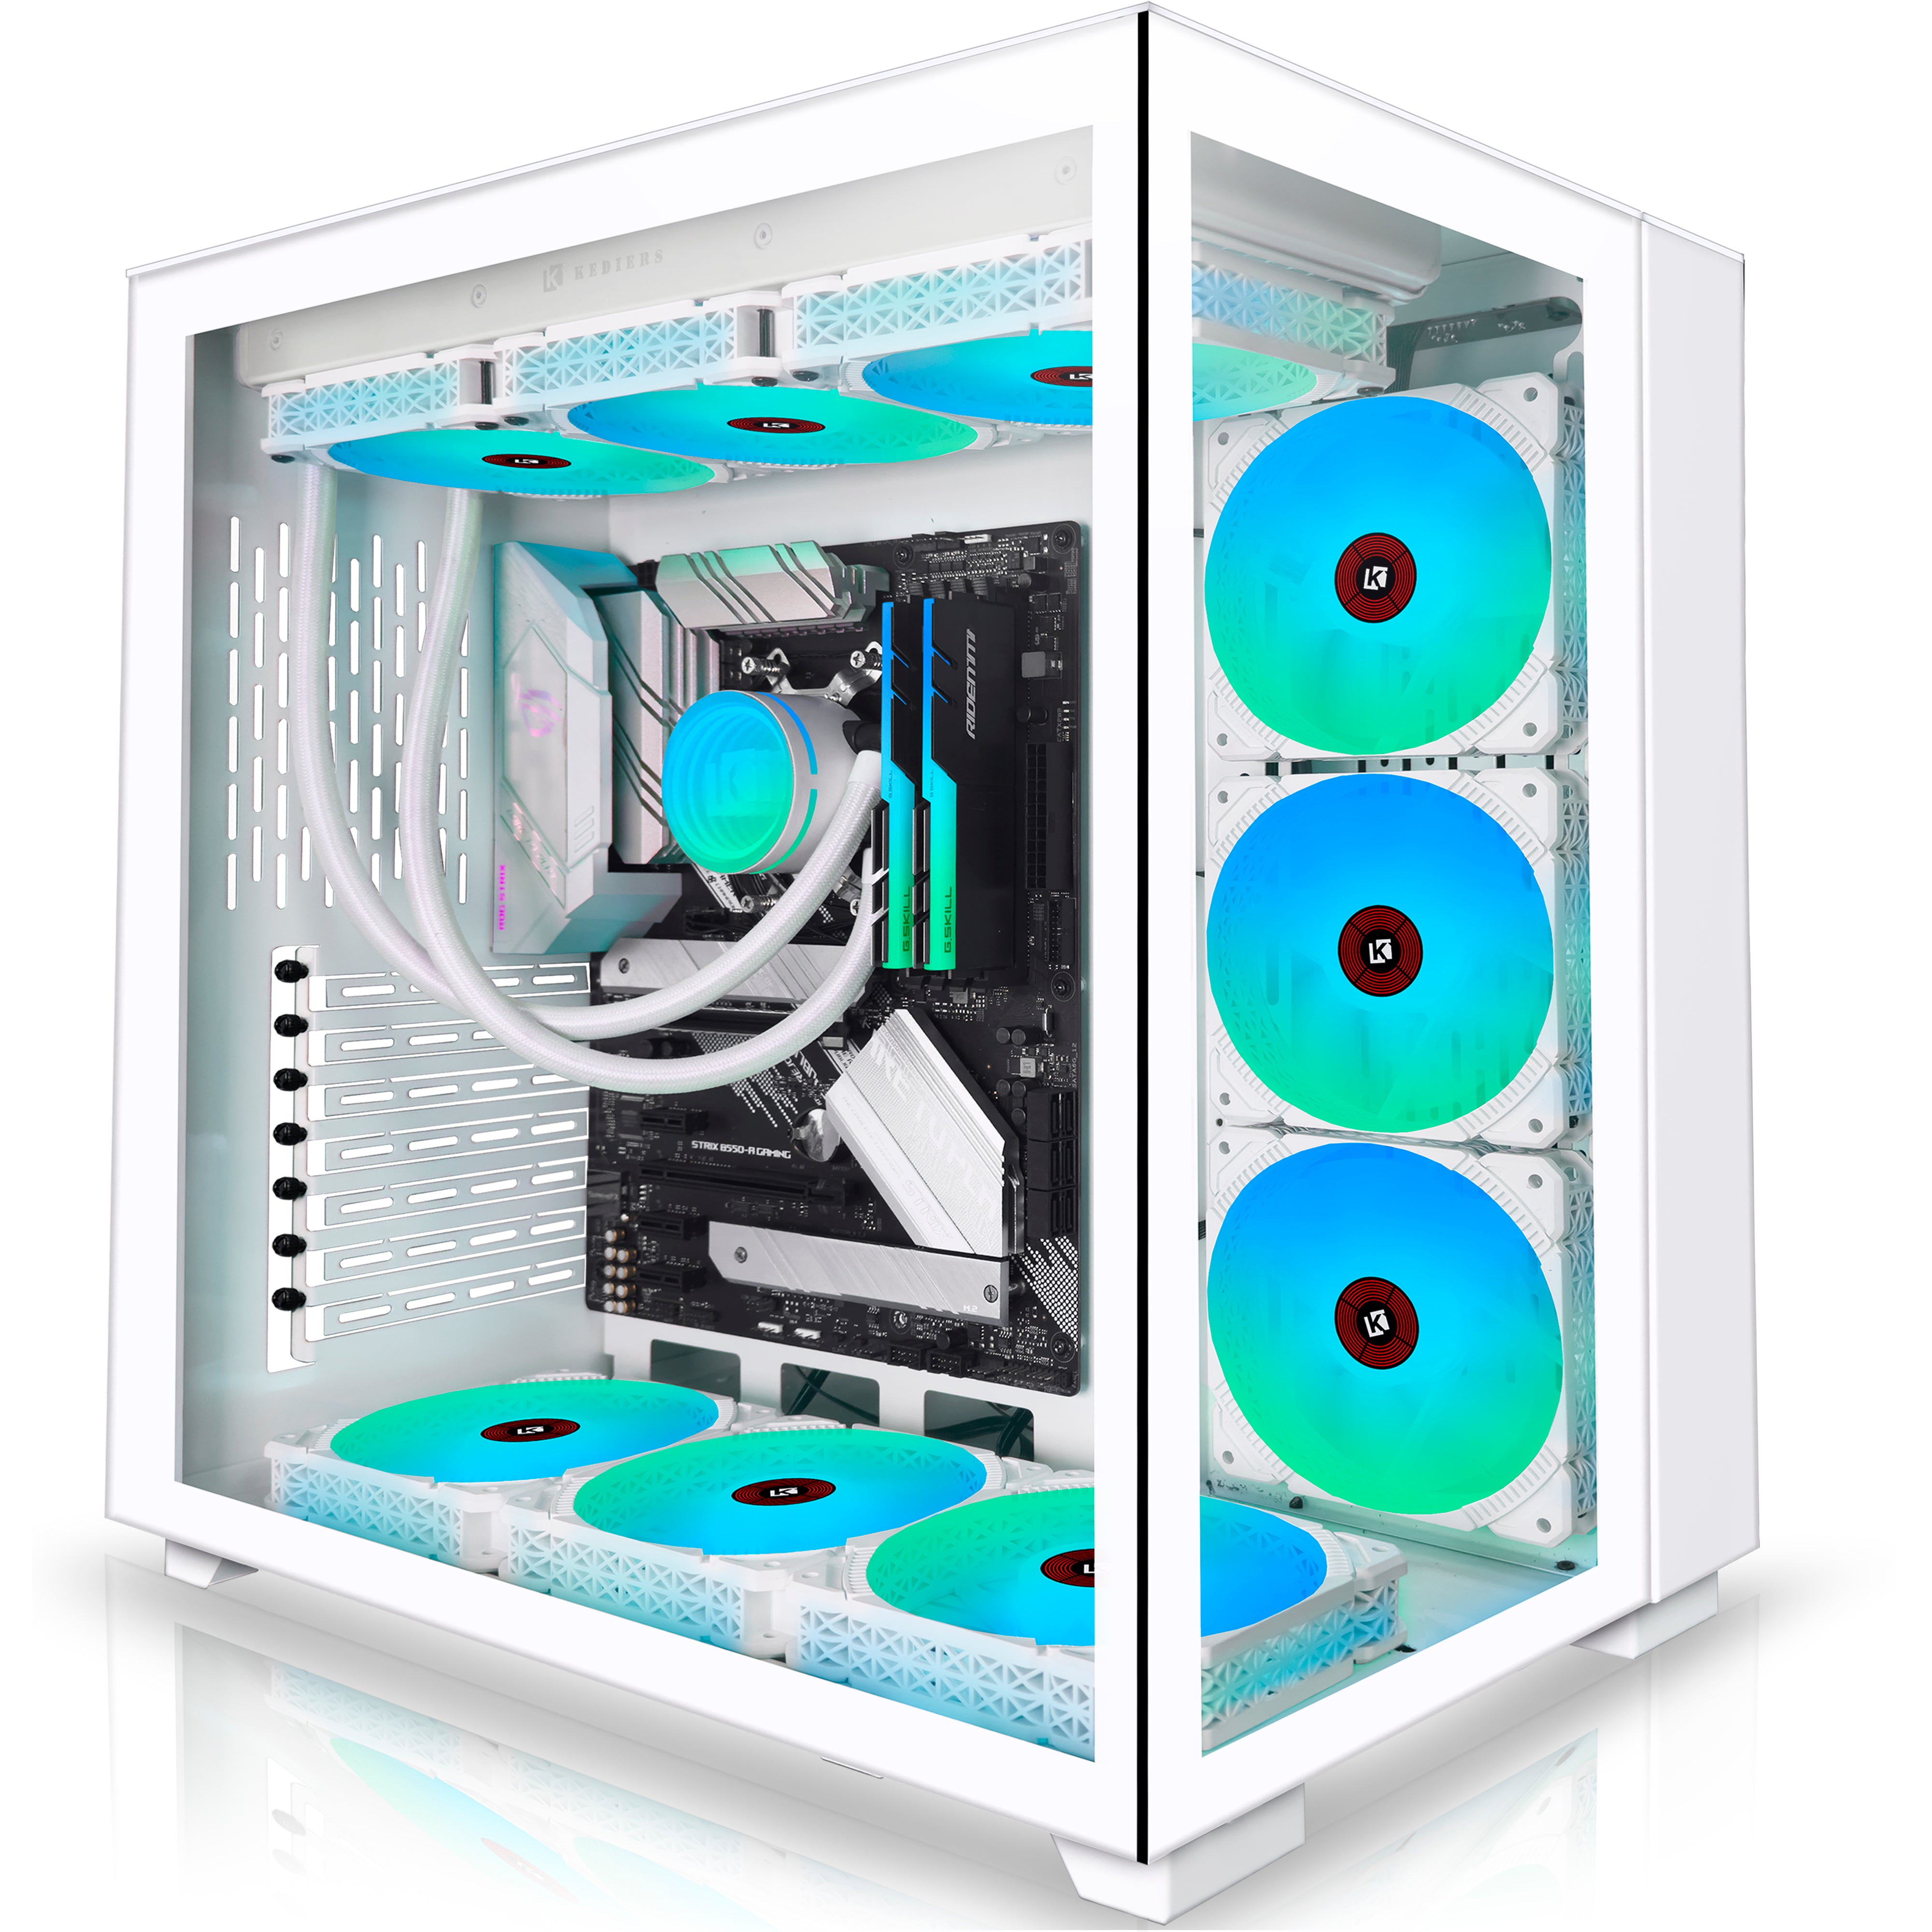 KEDIERS PC Case Pre-Install 6 PWM ARGB Cases Fans ATX Mid Tower